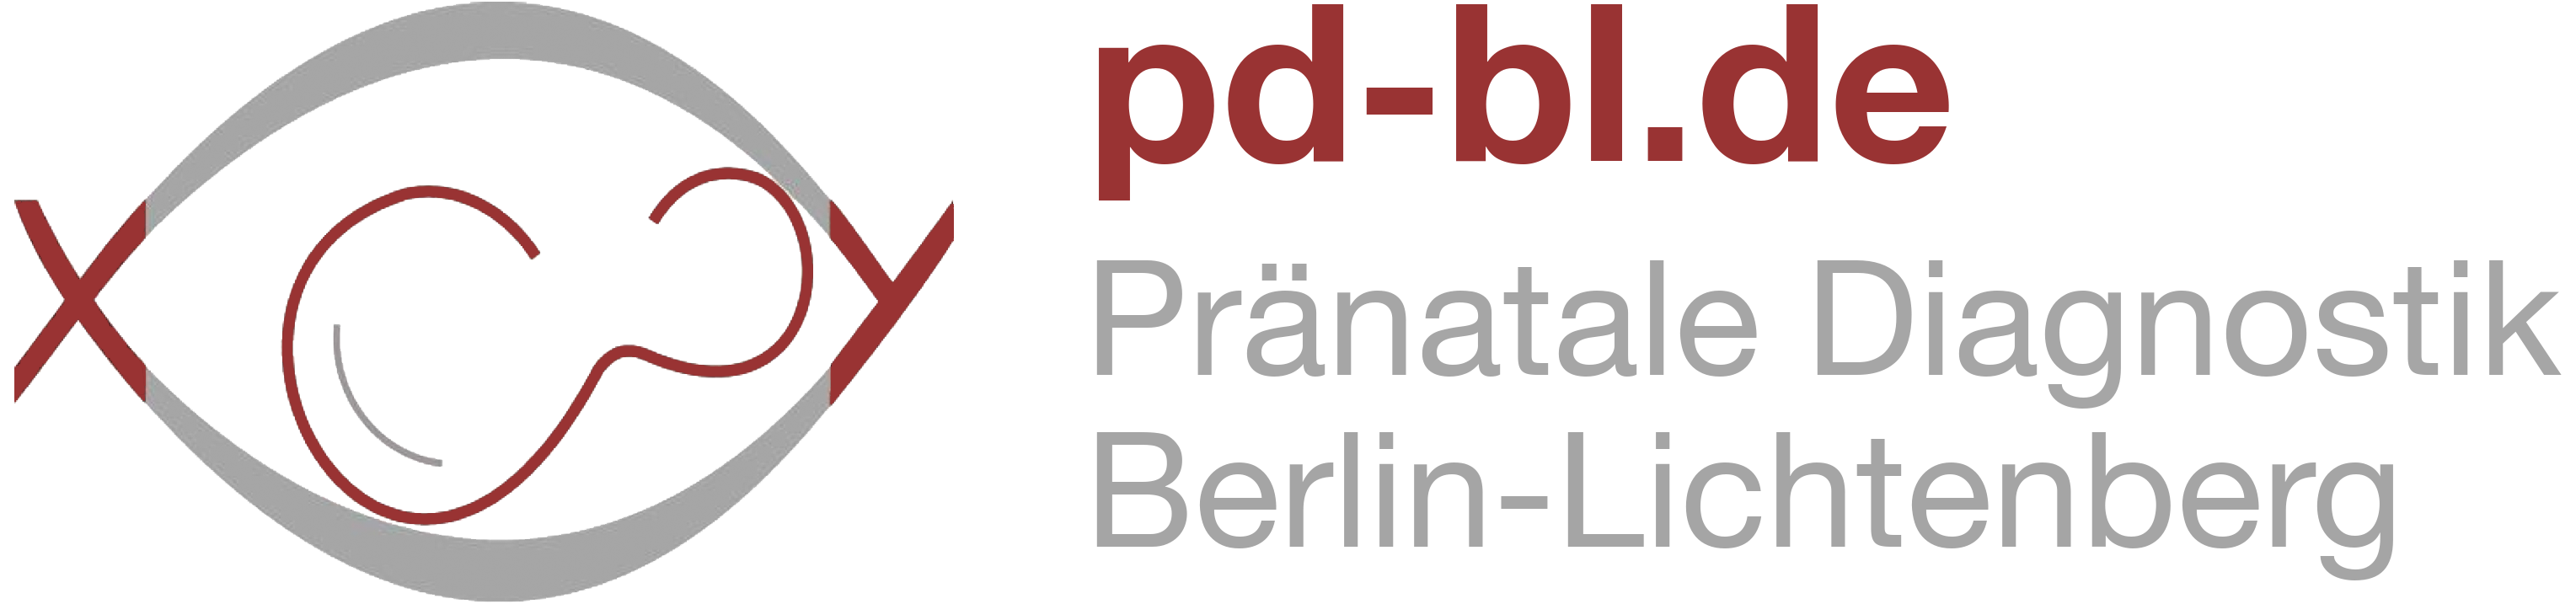 Logo pd-bl.de